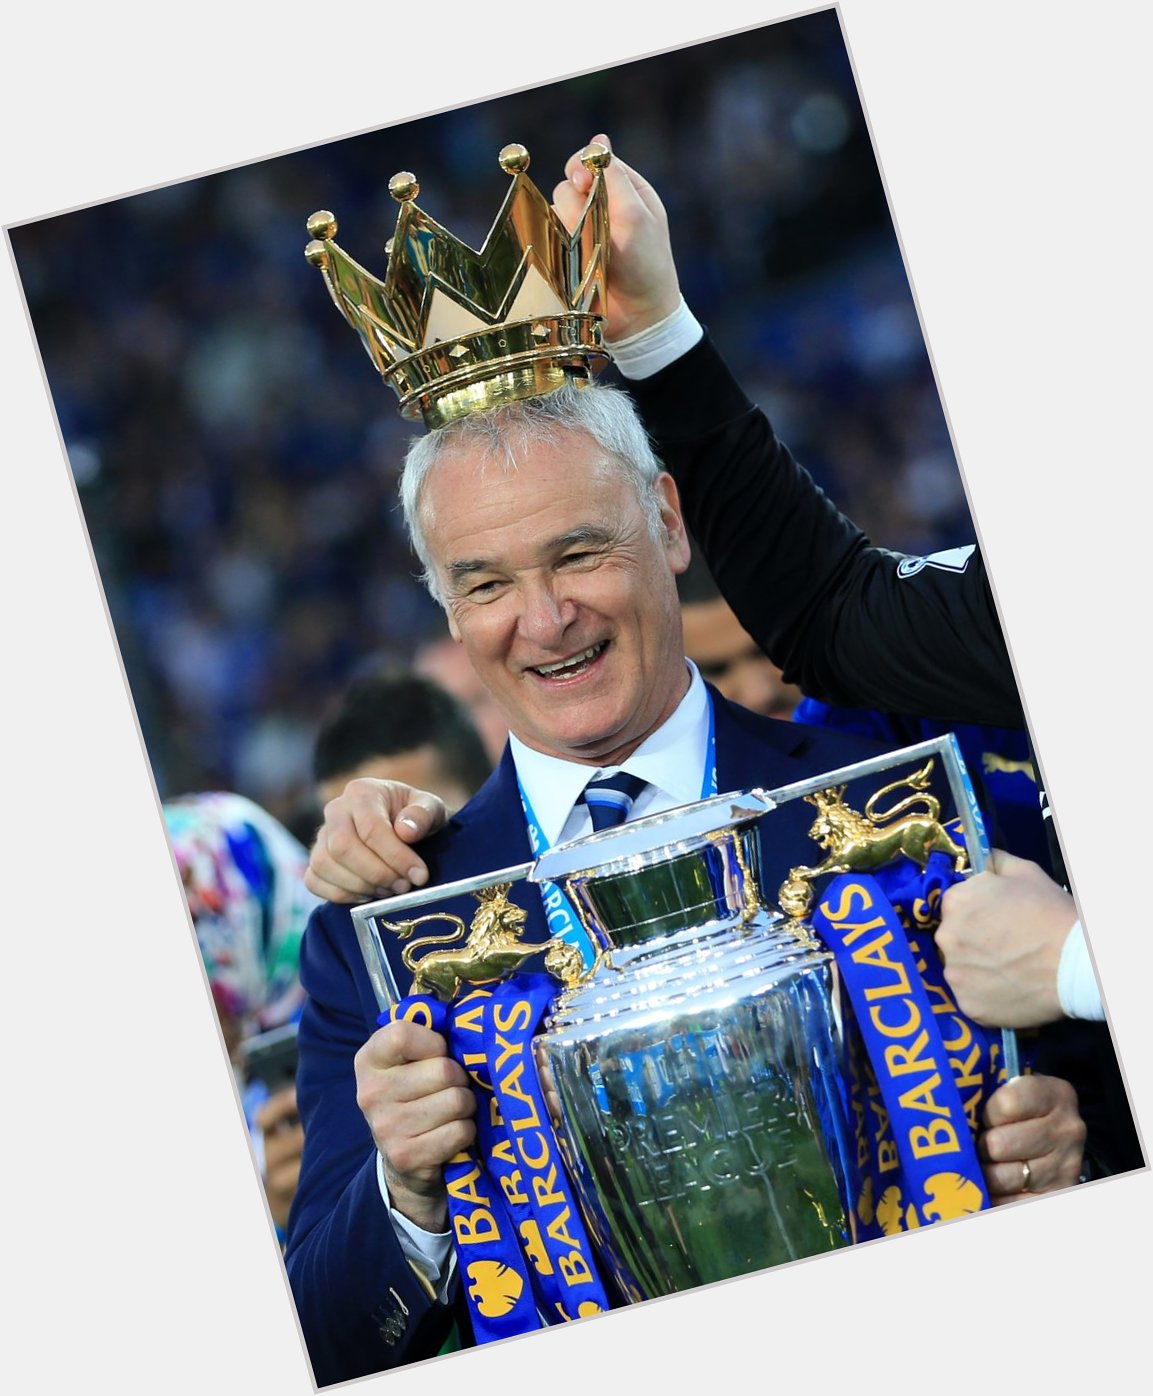 Happy birthday to Claudio Ranieri! Legend 